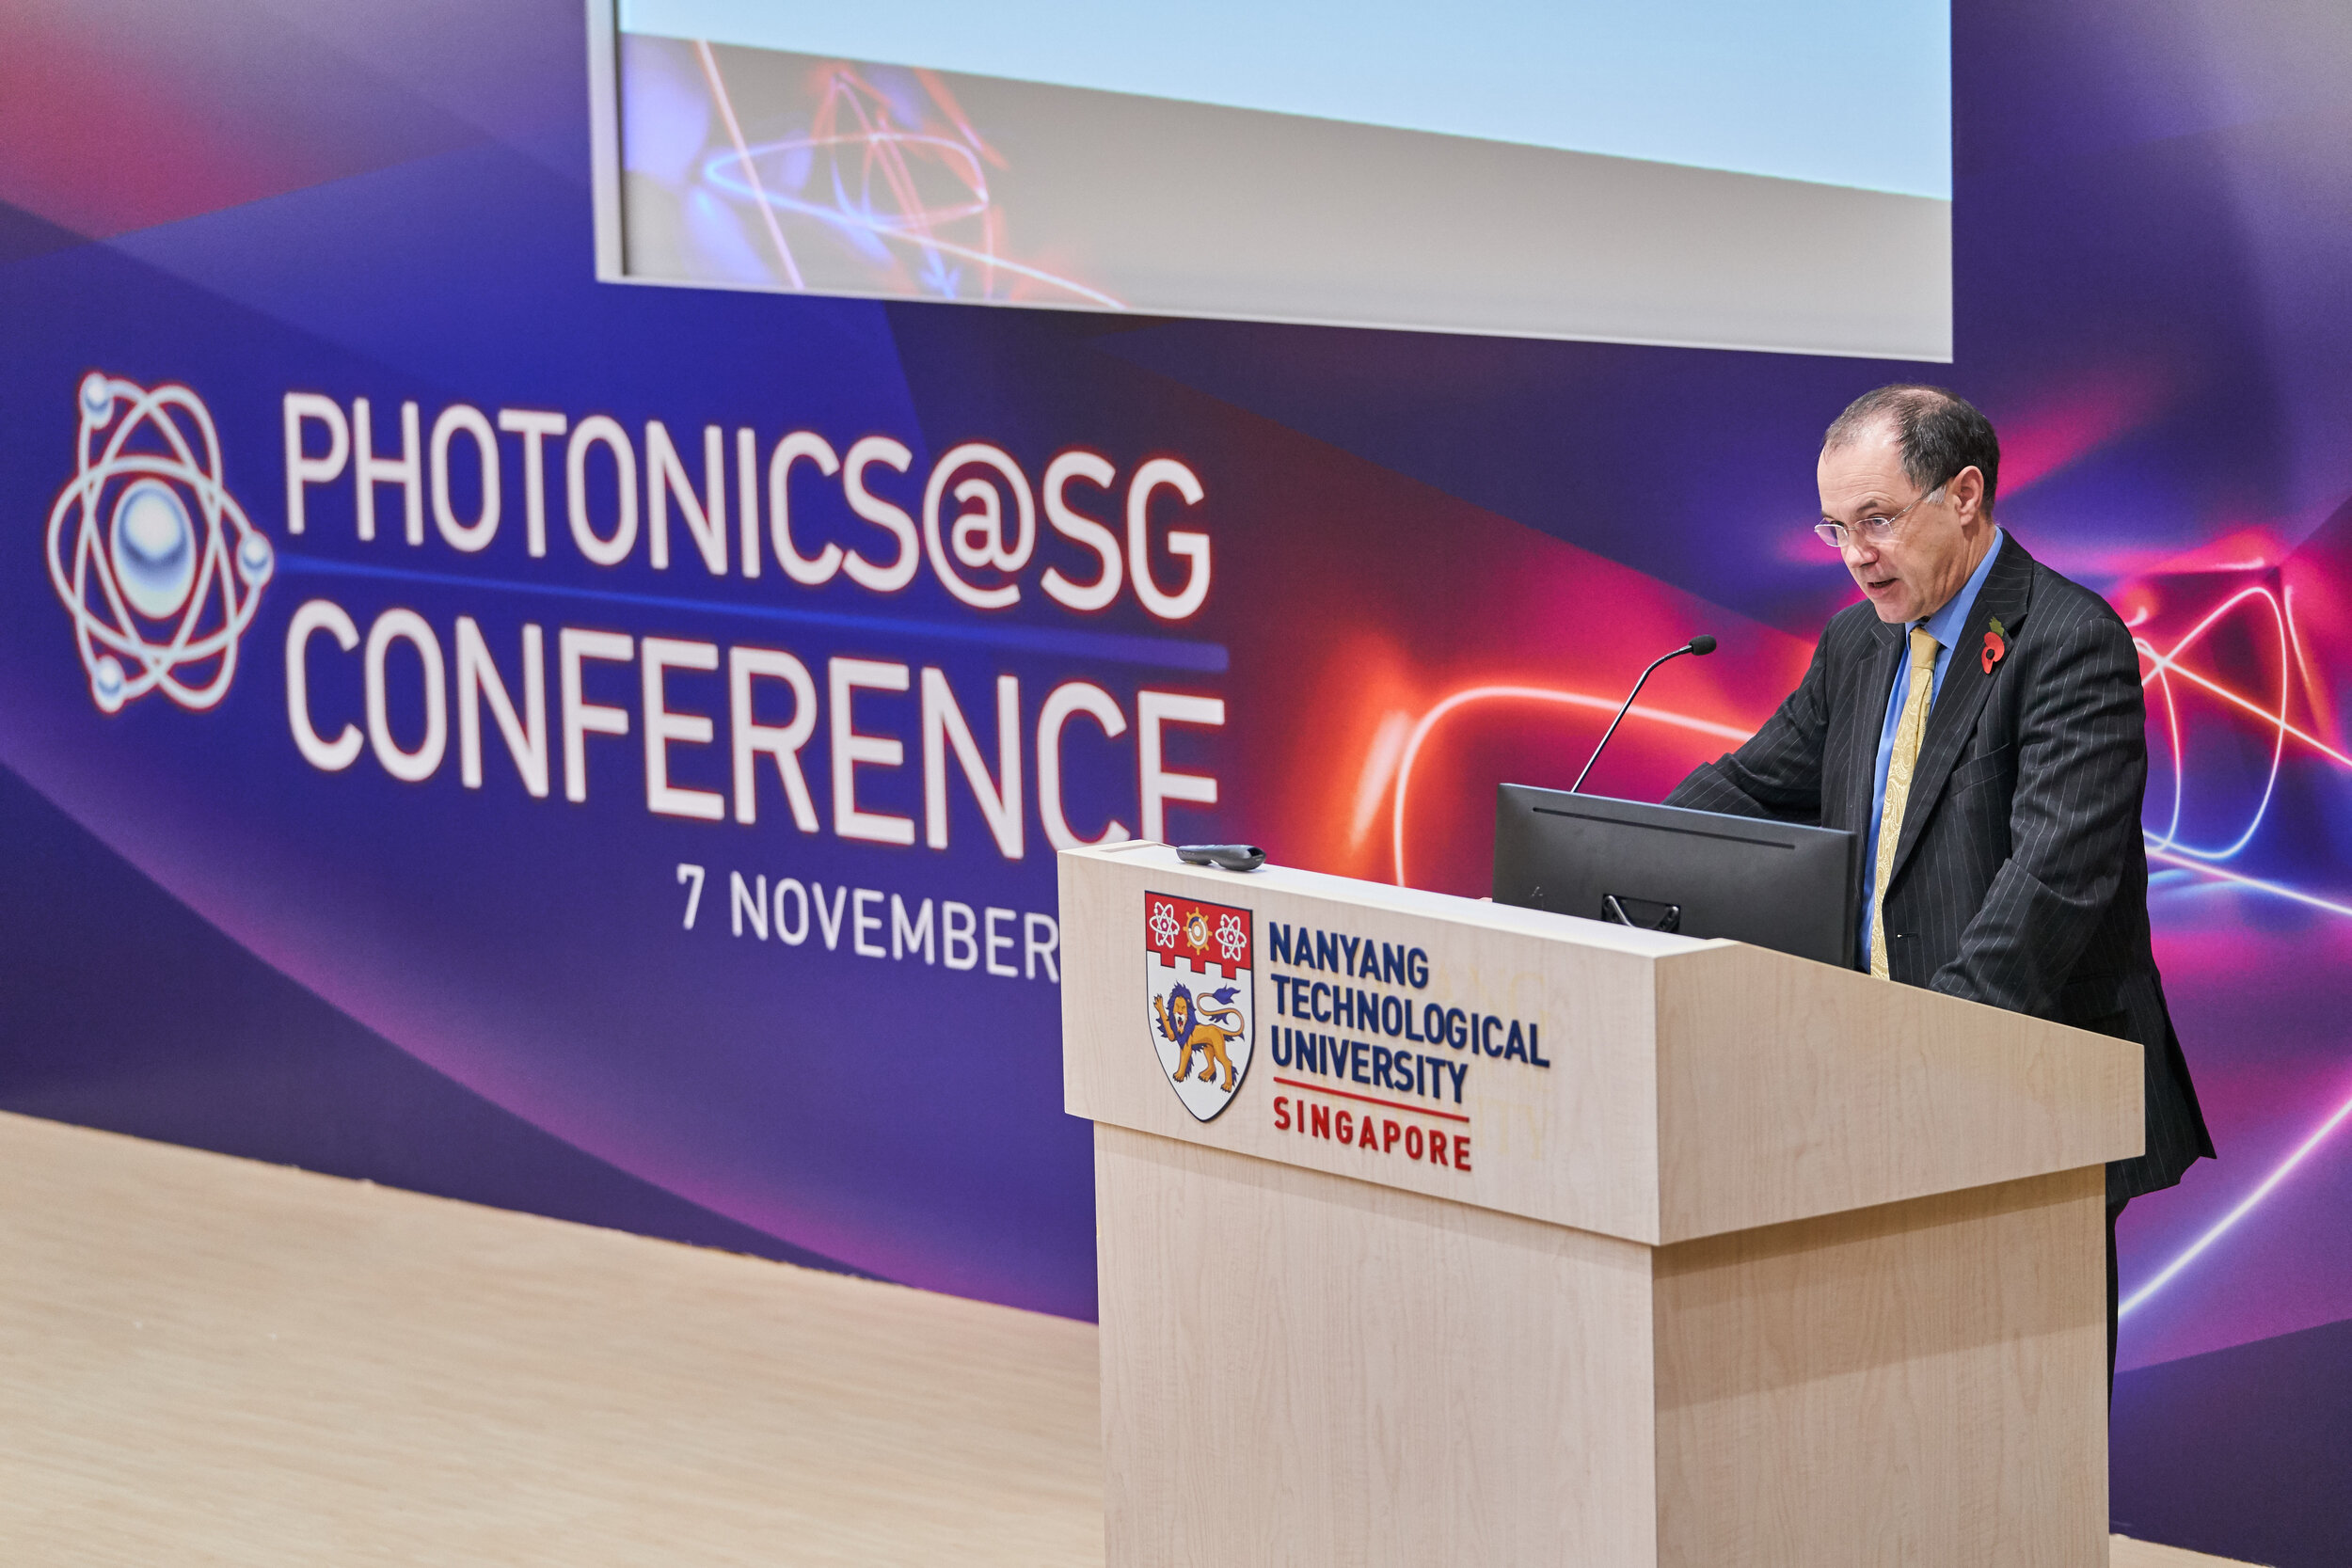 TPI PhotonicsSG 2019 Conference 0073ml.jpg